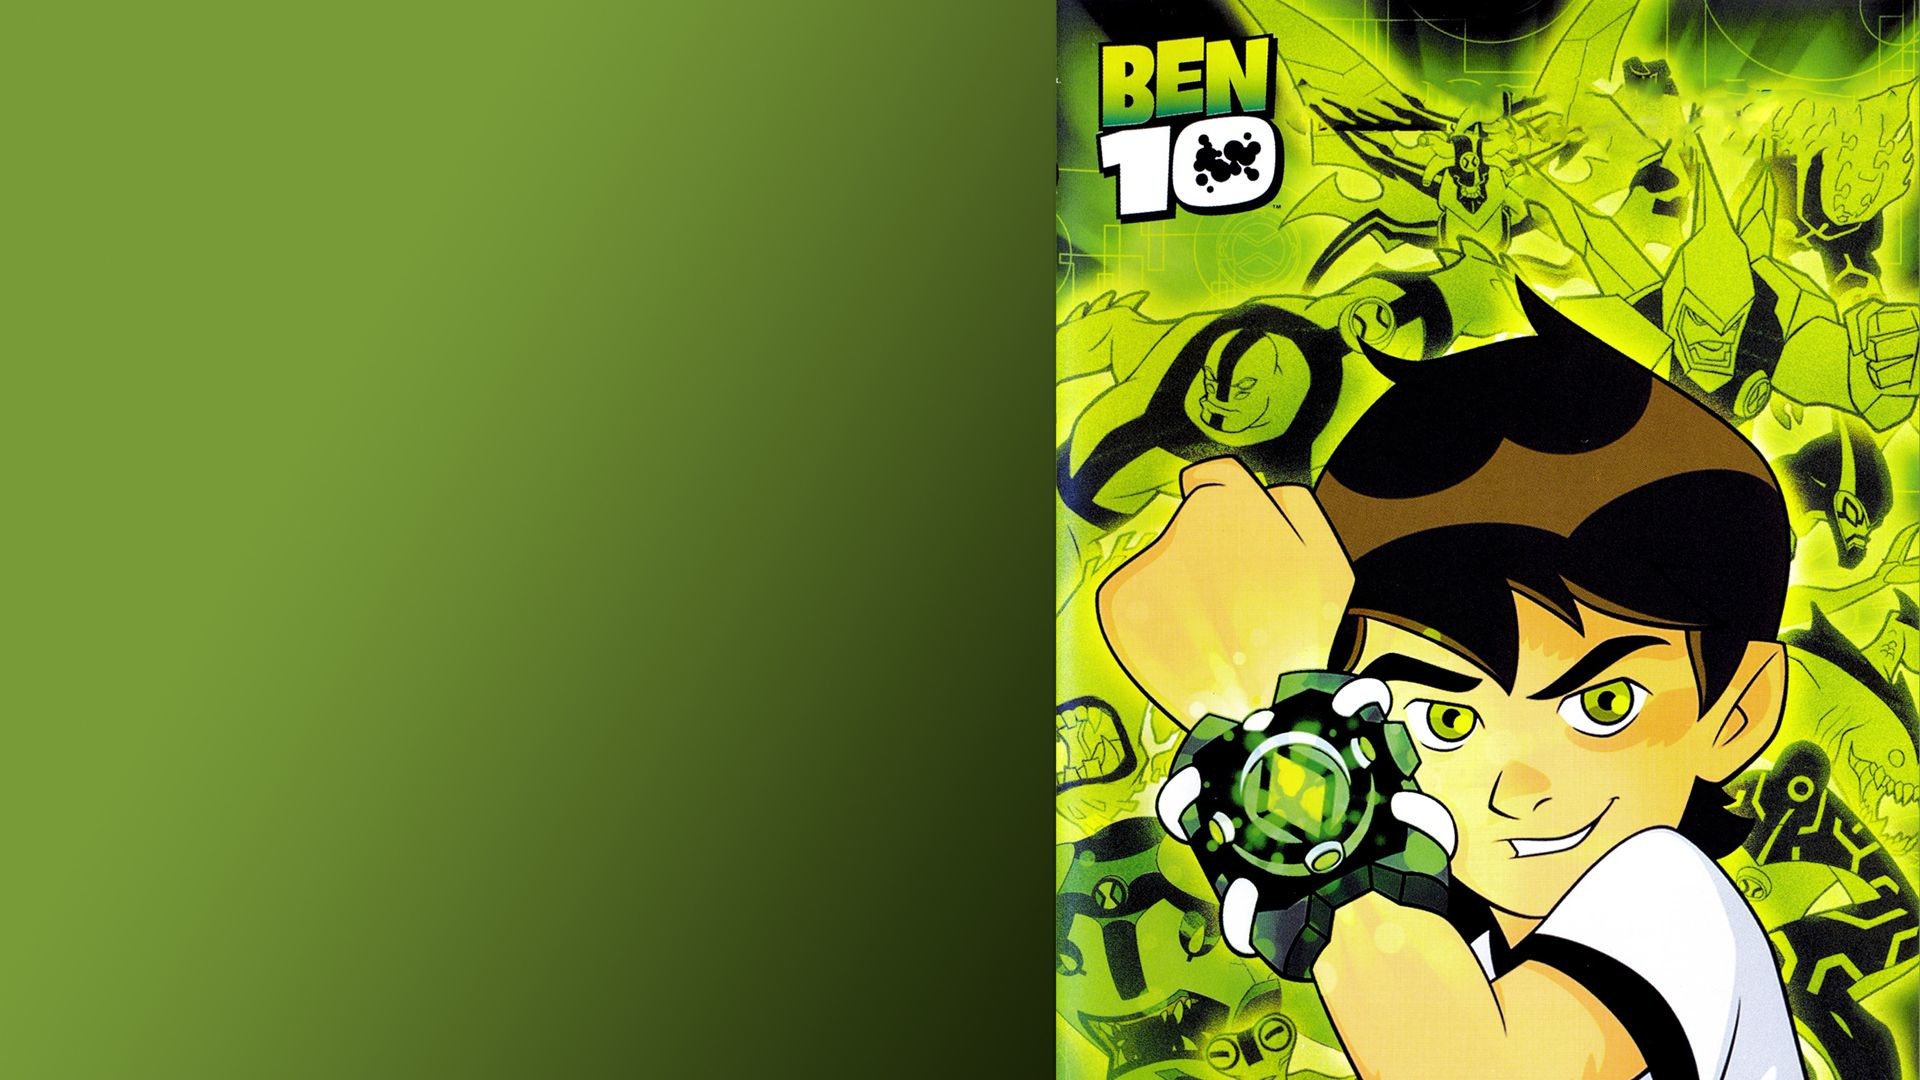 Free Ben 10 Ultimate Alien Wallpaper APK Download For Android | GetJar